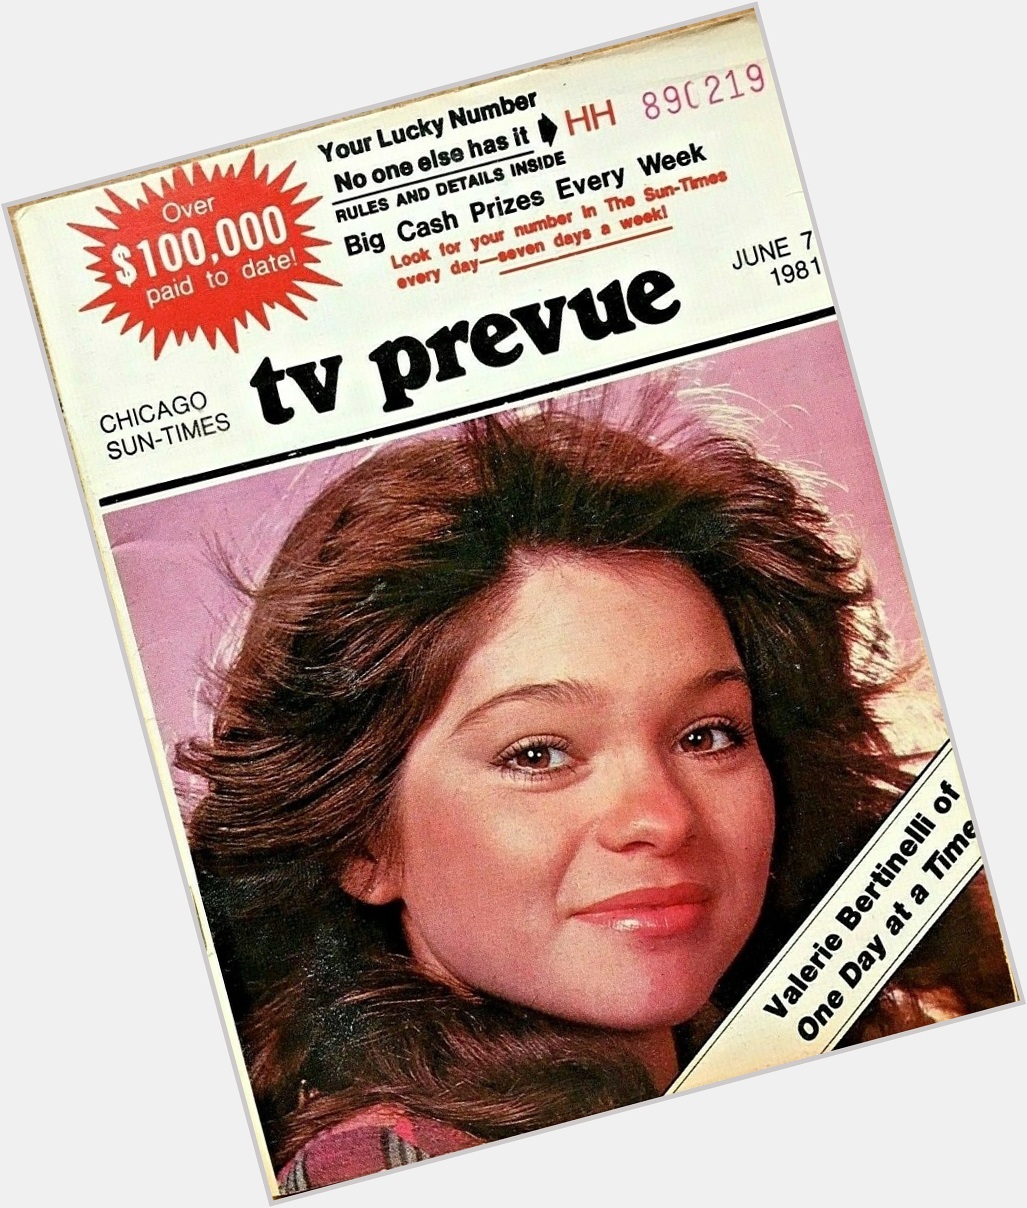 Happy Birthday to Valerie Bertinelli, born OTD in 1960
Chicago Sun-Times TV Prevue.  June 7-13, 1982 